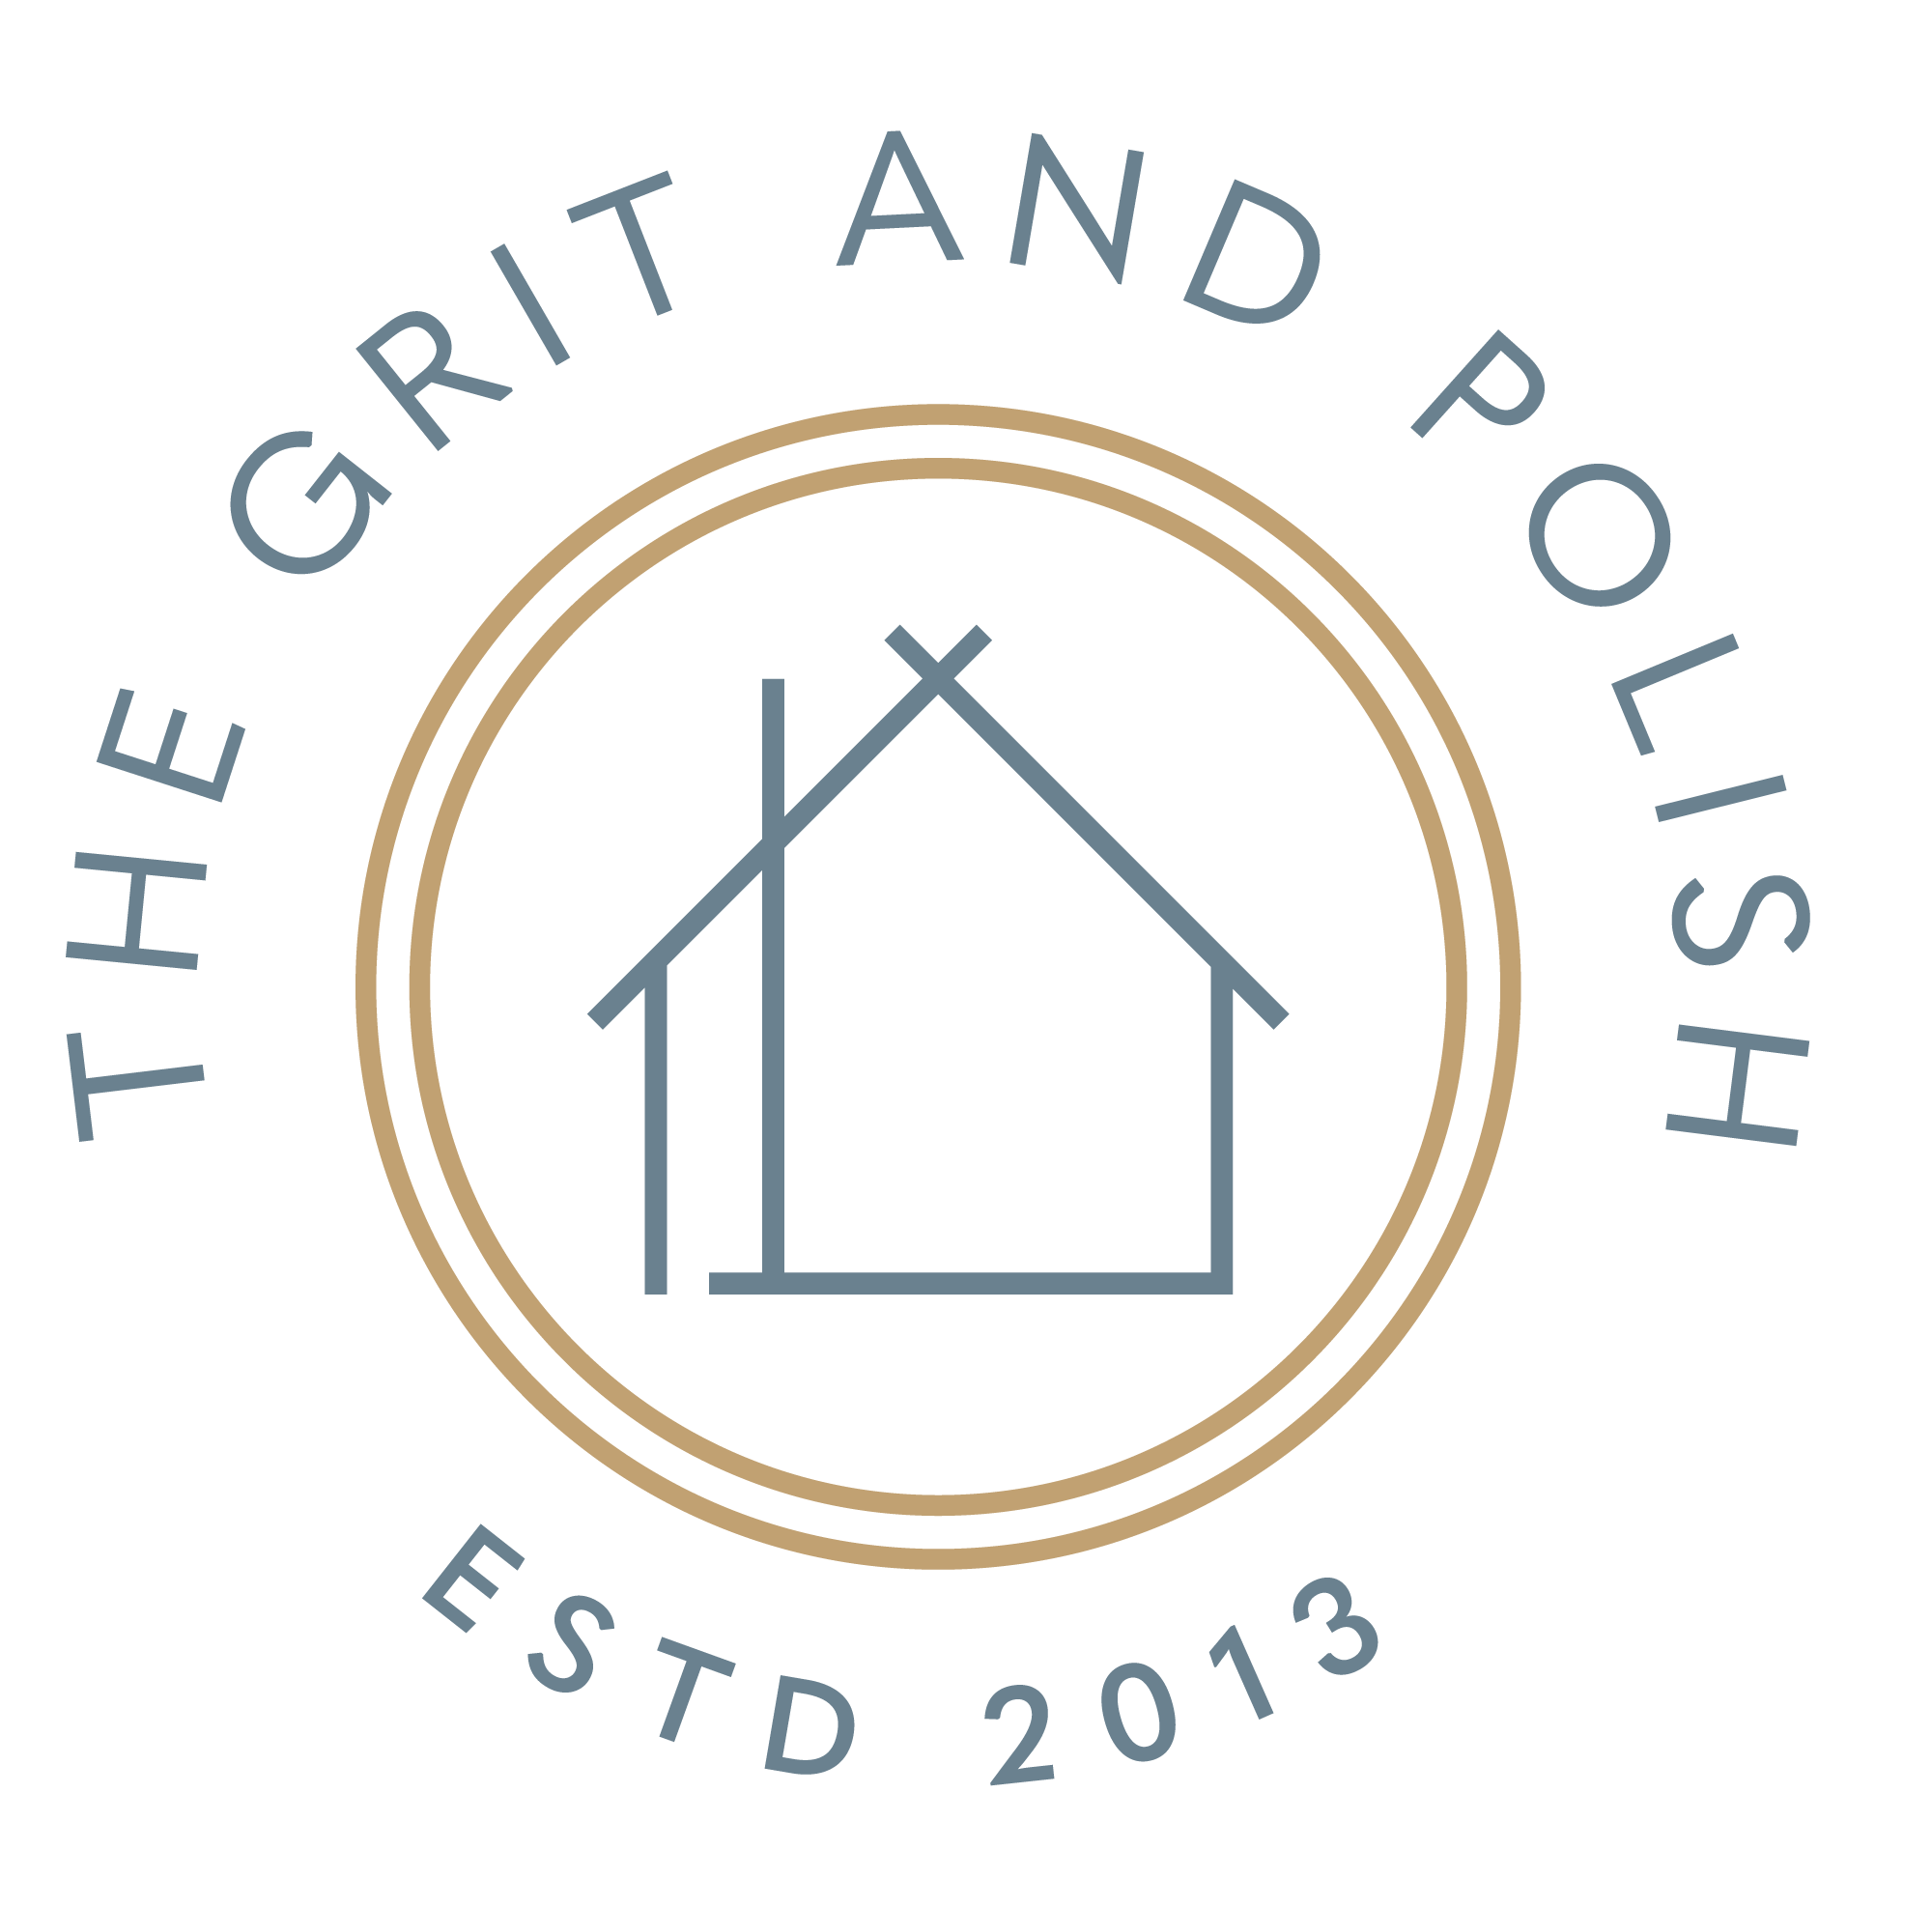 The Grit and Polish Blog